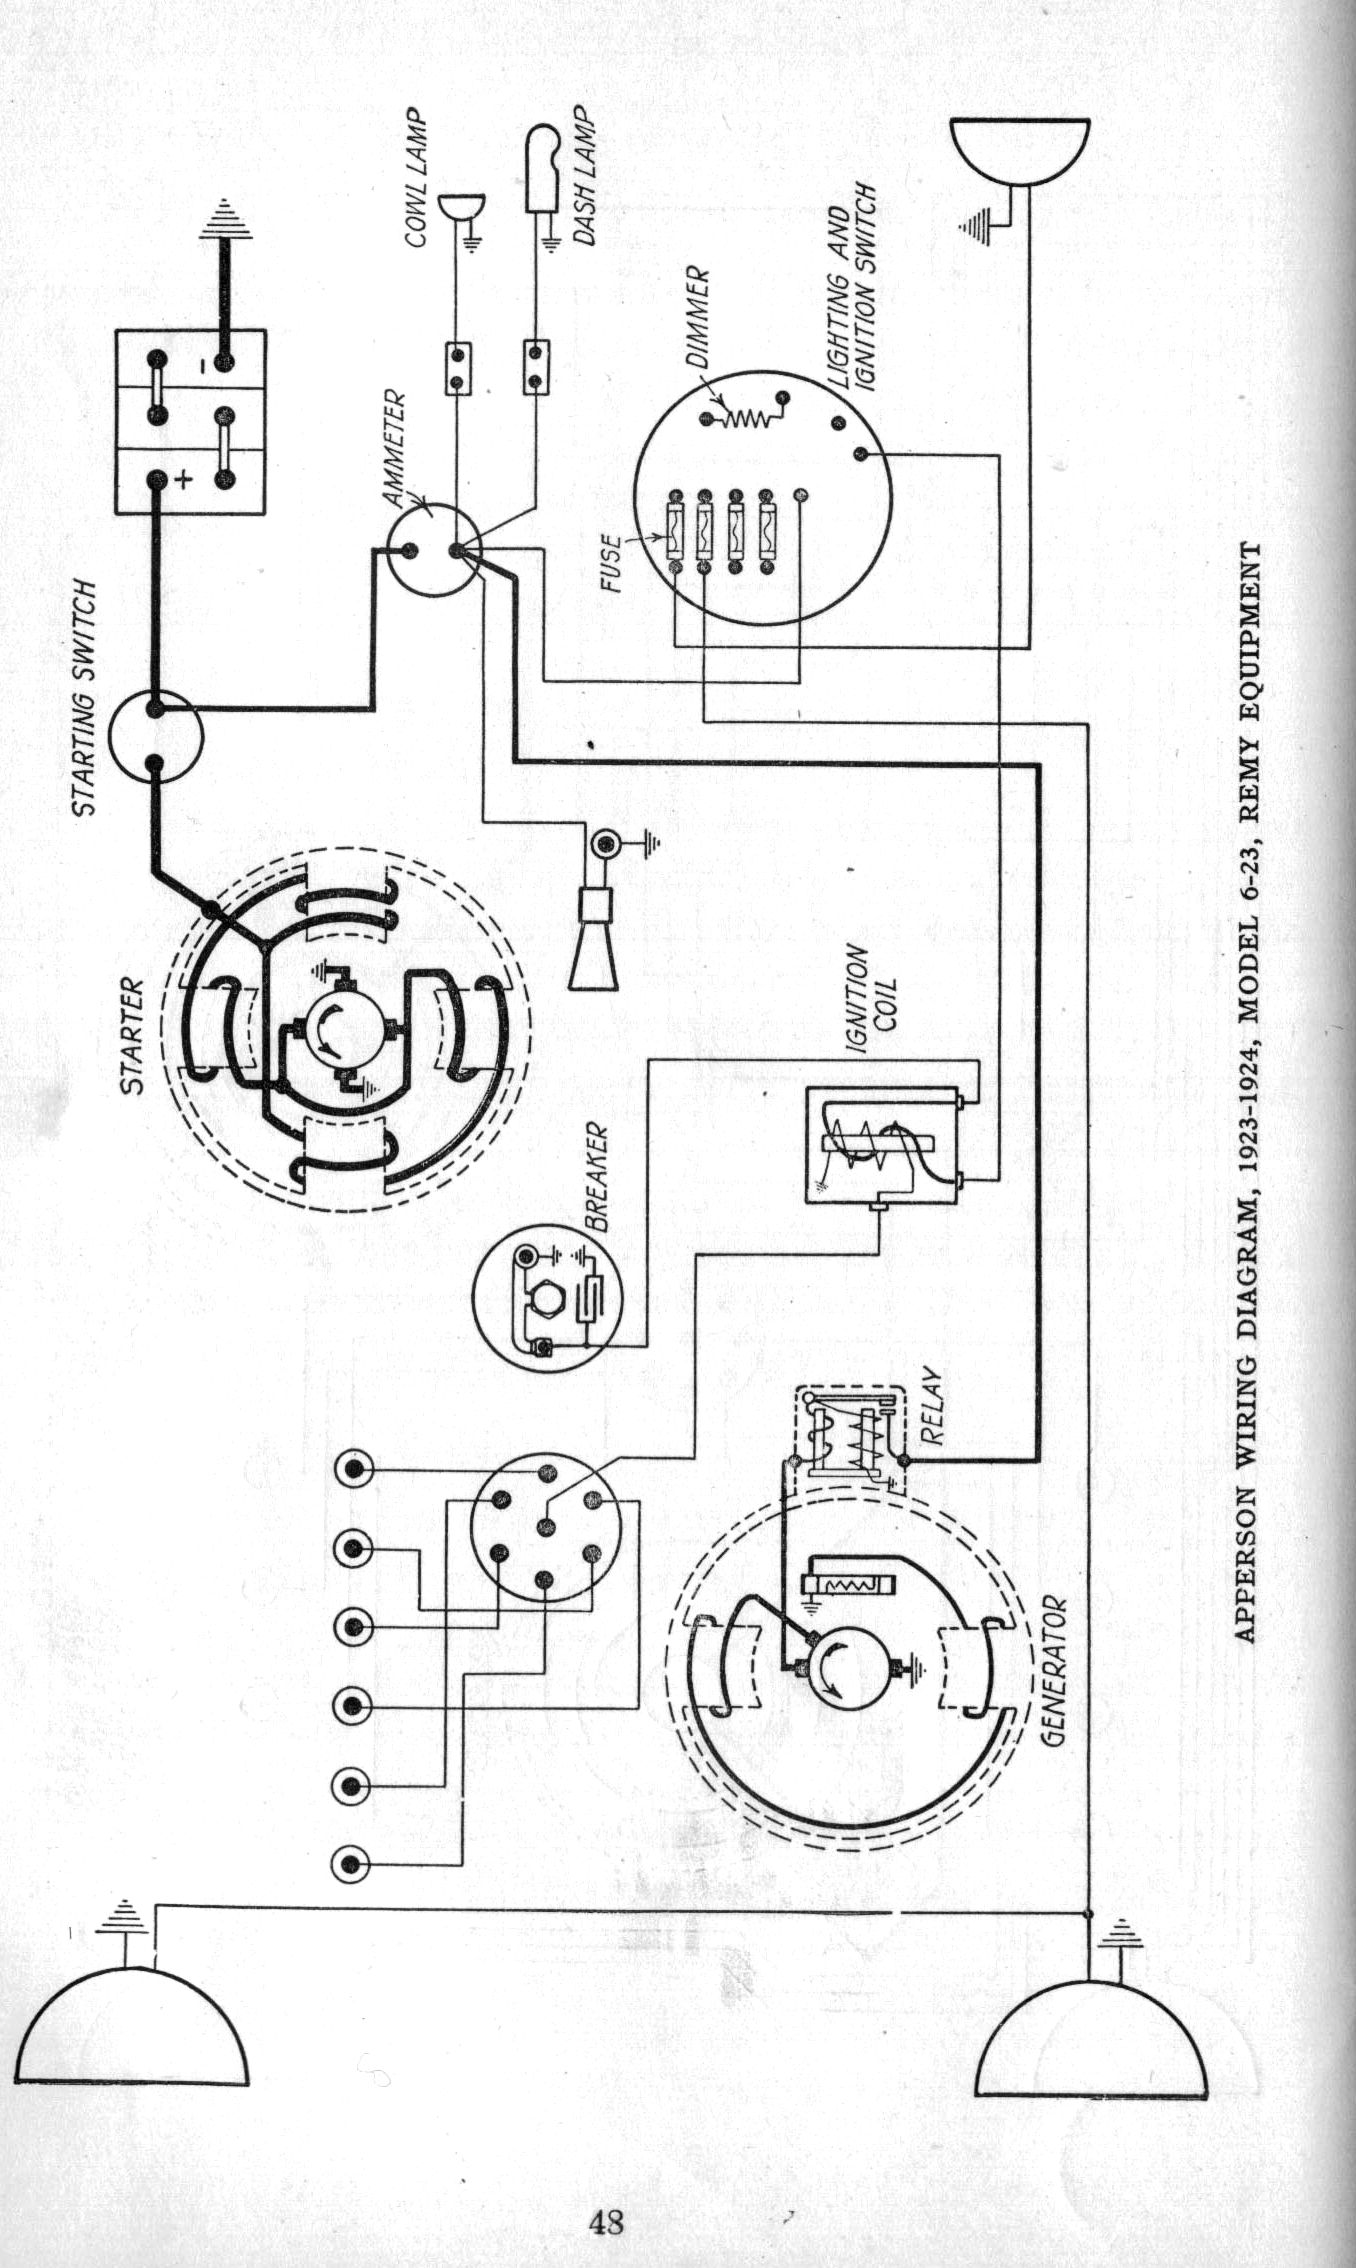 [DIAGRAM] Chevrolet Model K 1925 Car Wiring Electrical Diagram ...